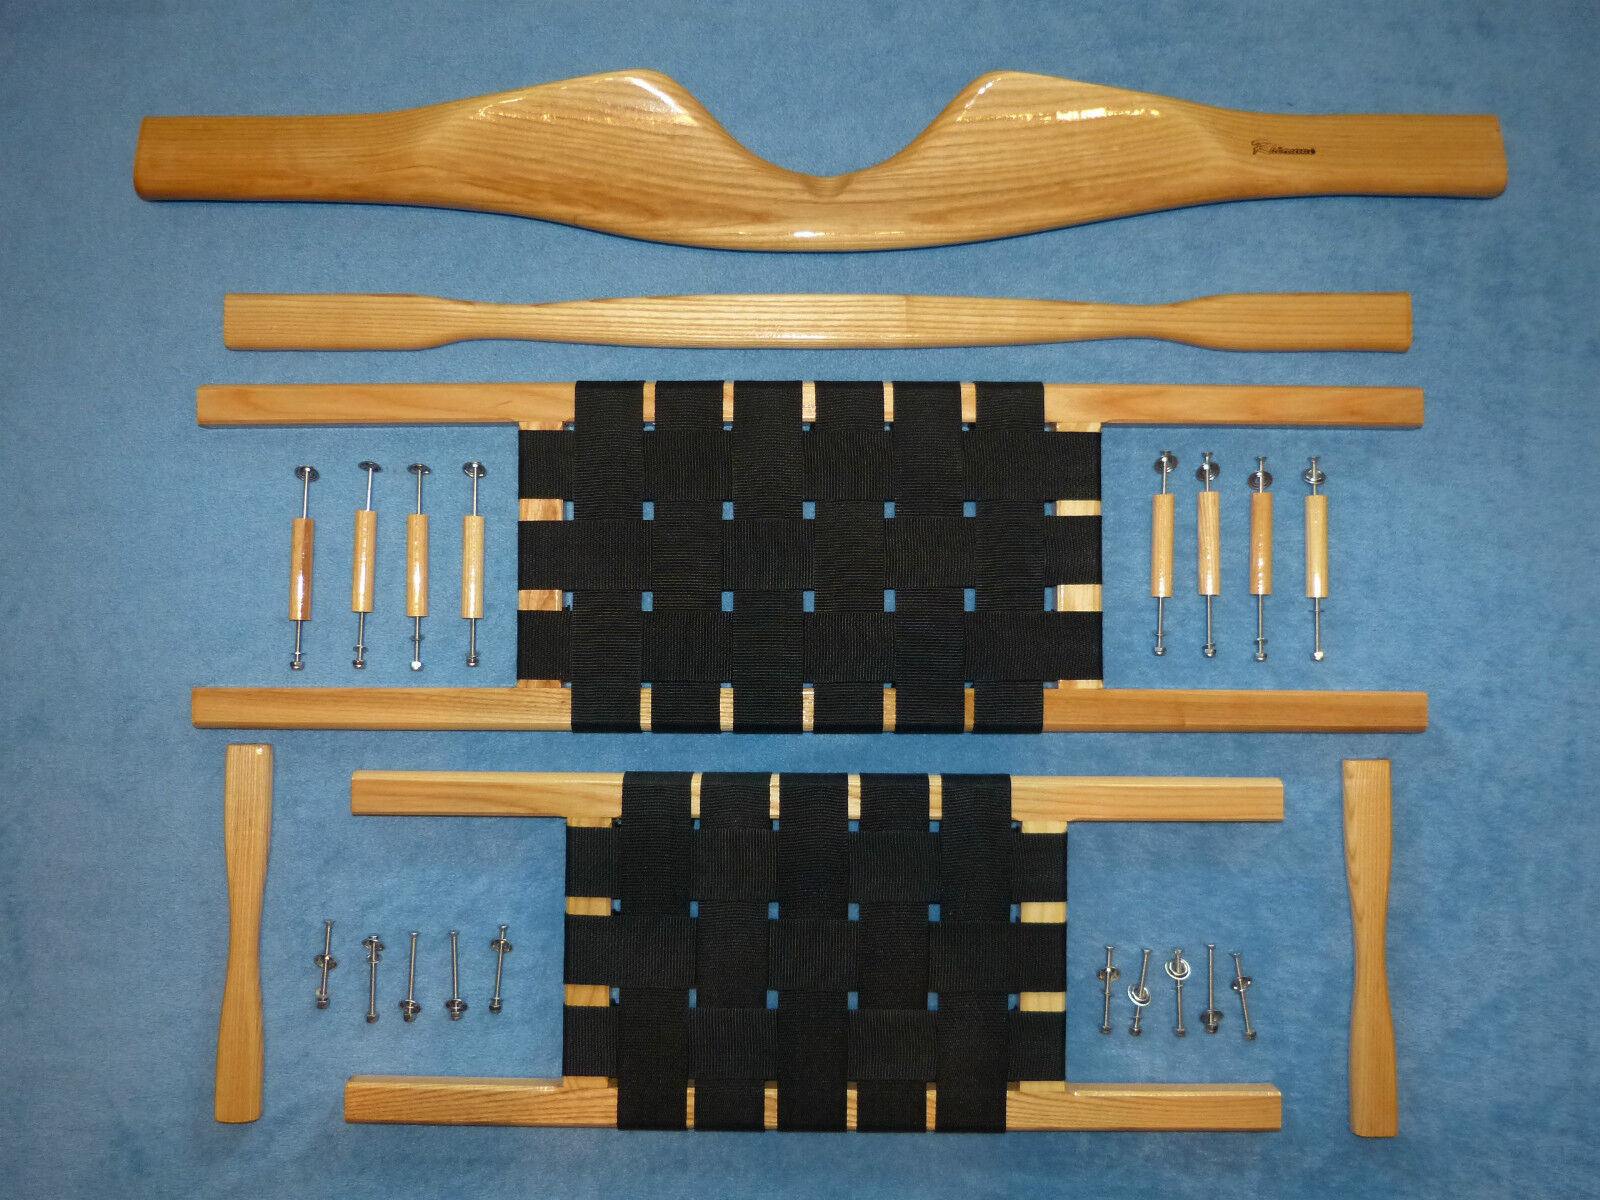 Web canoe seats,deep dish ash yoke,thwart,handles and hardware